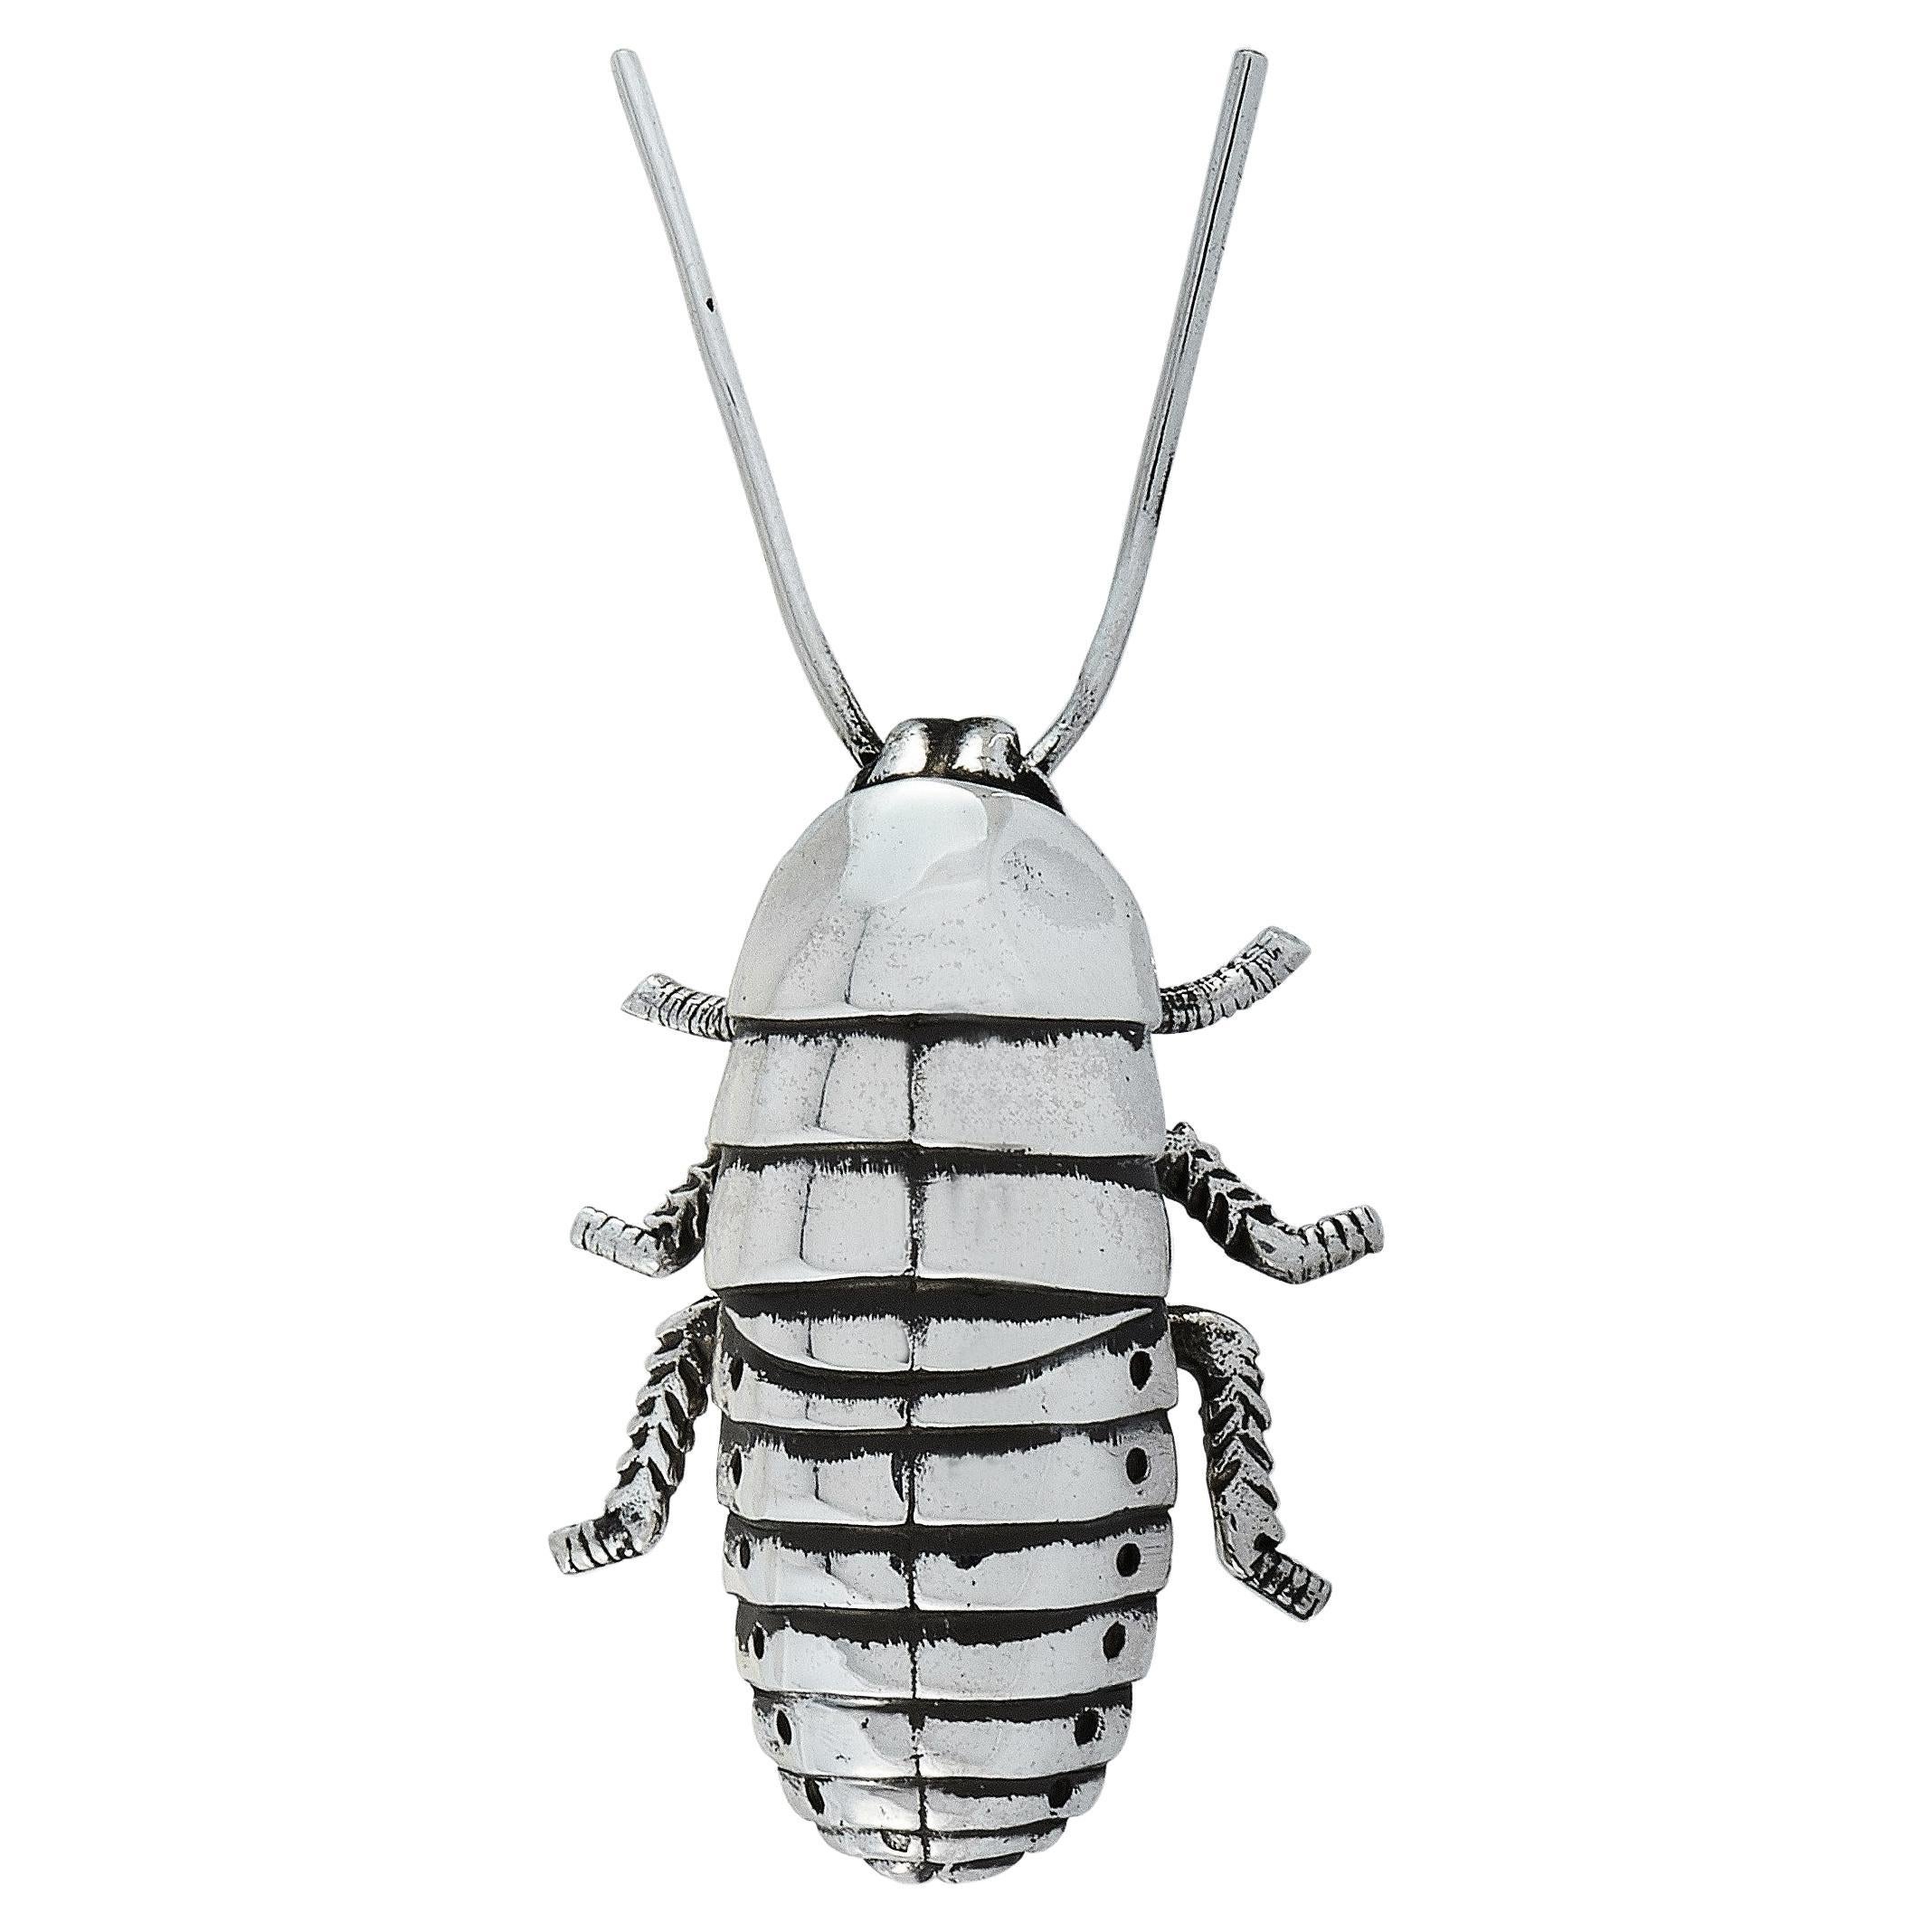 King Baby Silver Large Roach Lapel Pin